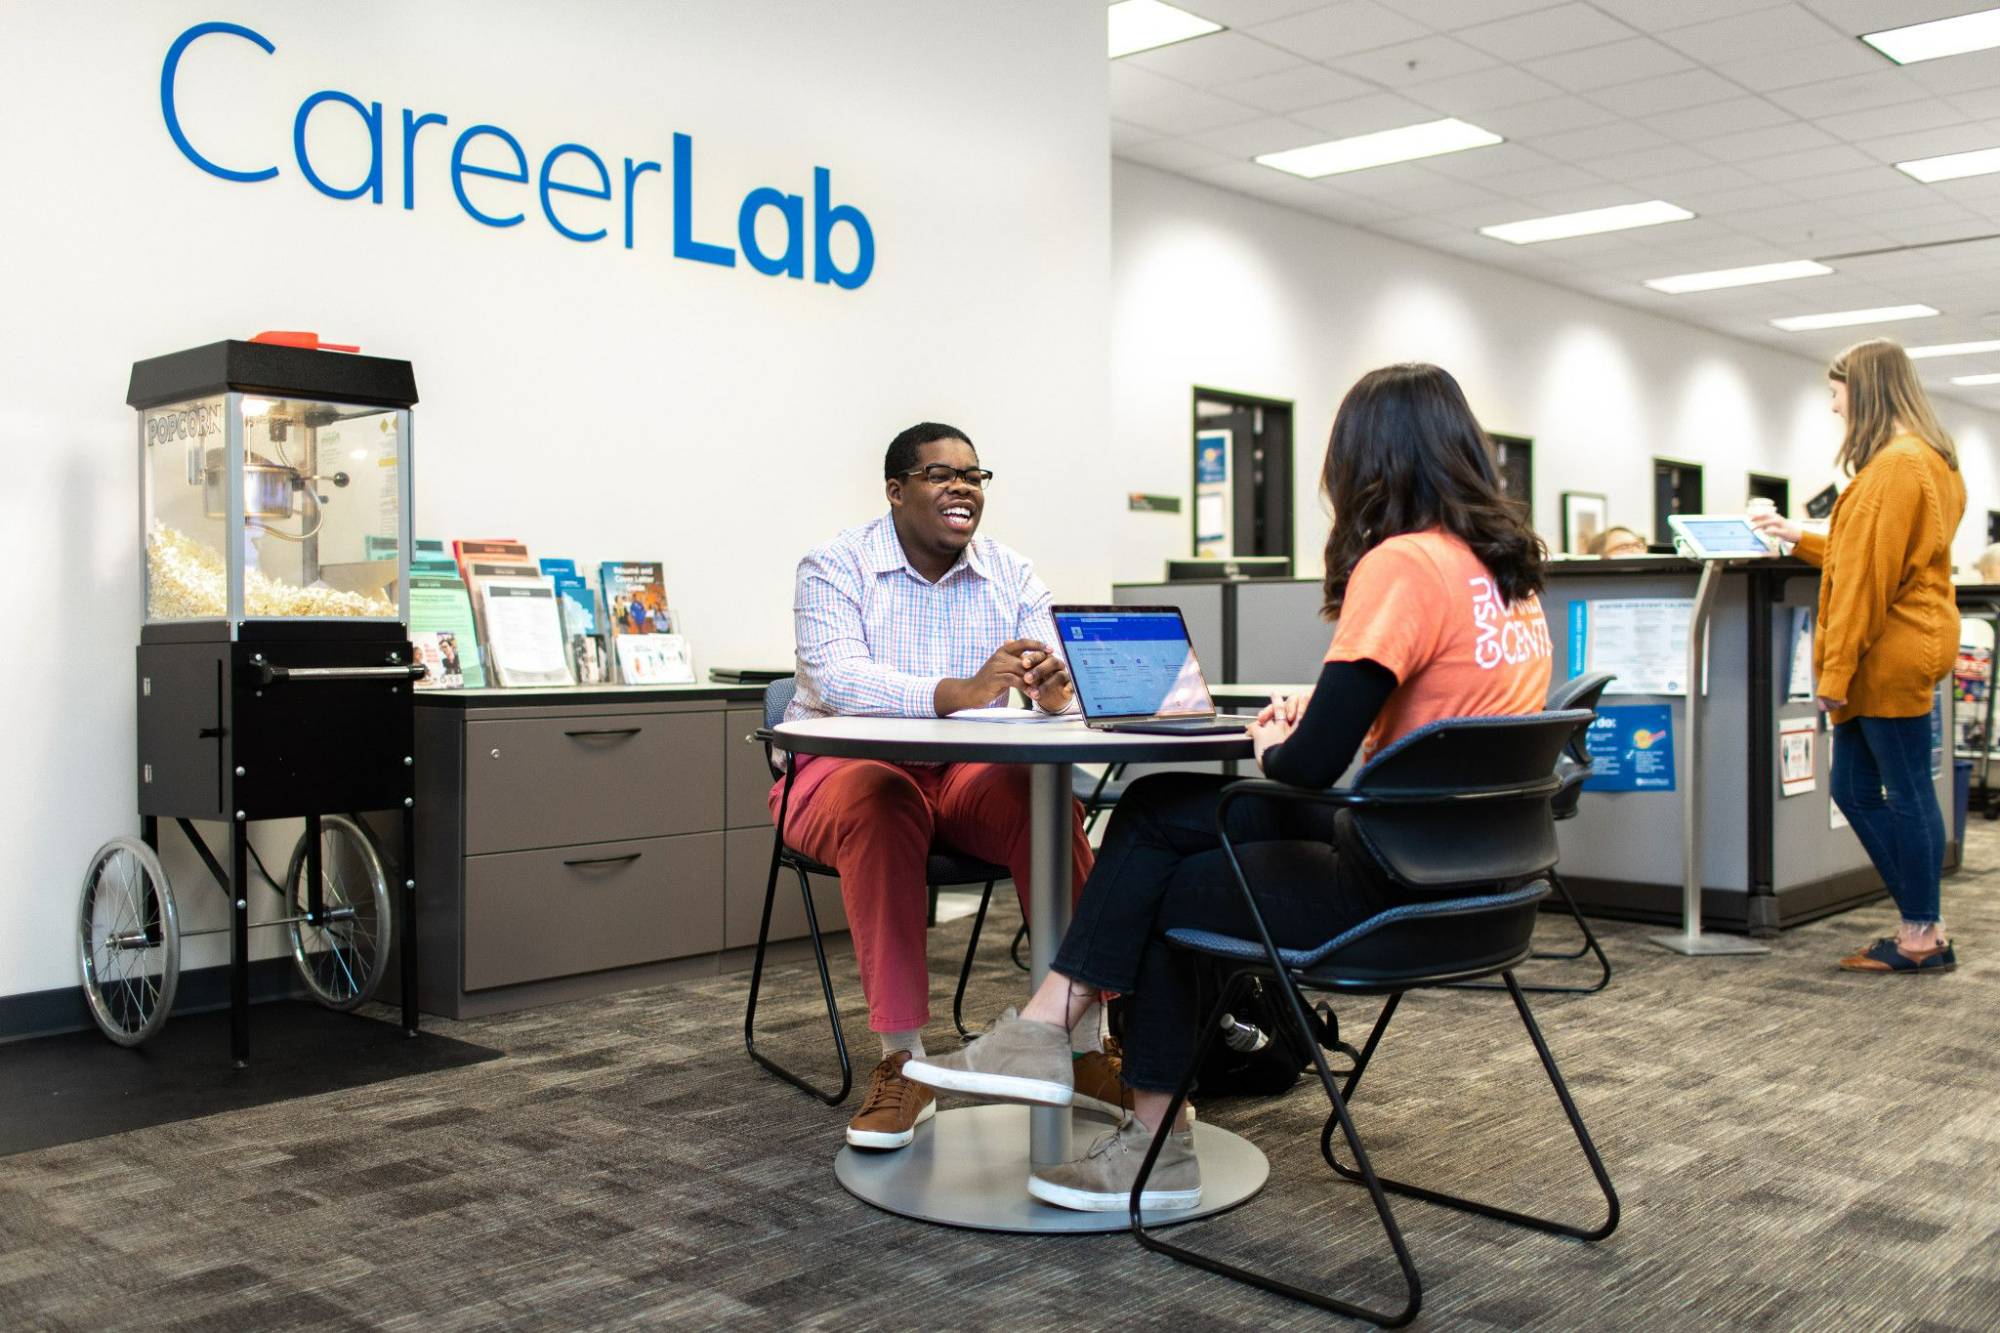 Students meeting at Career Lab